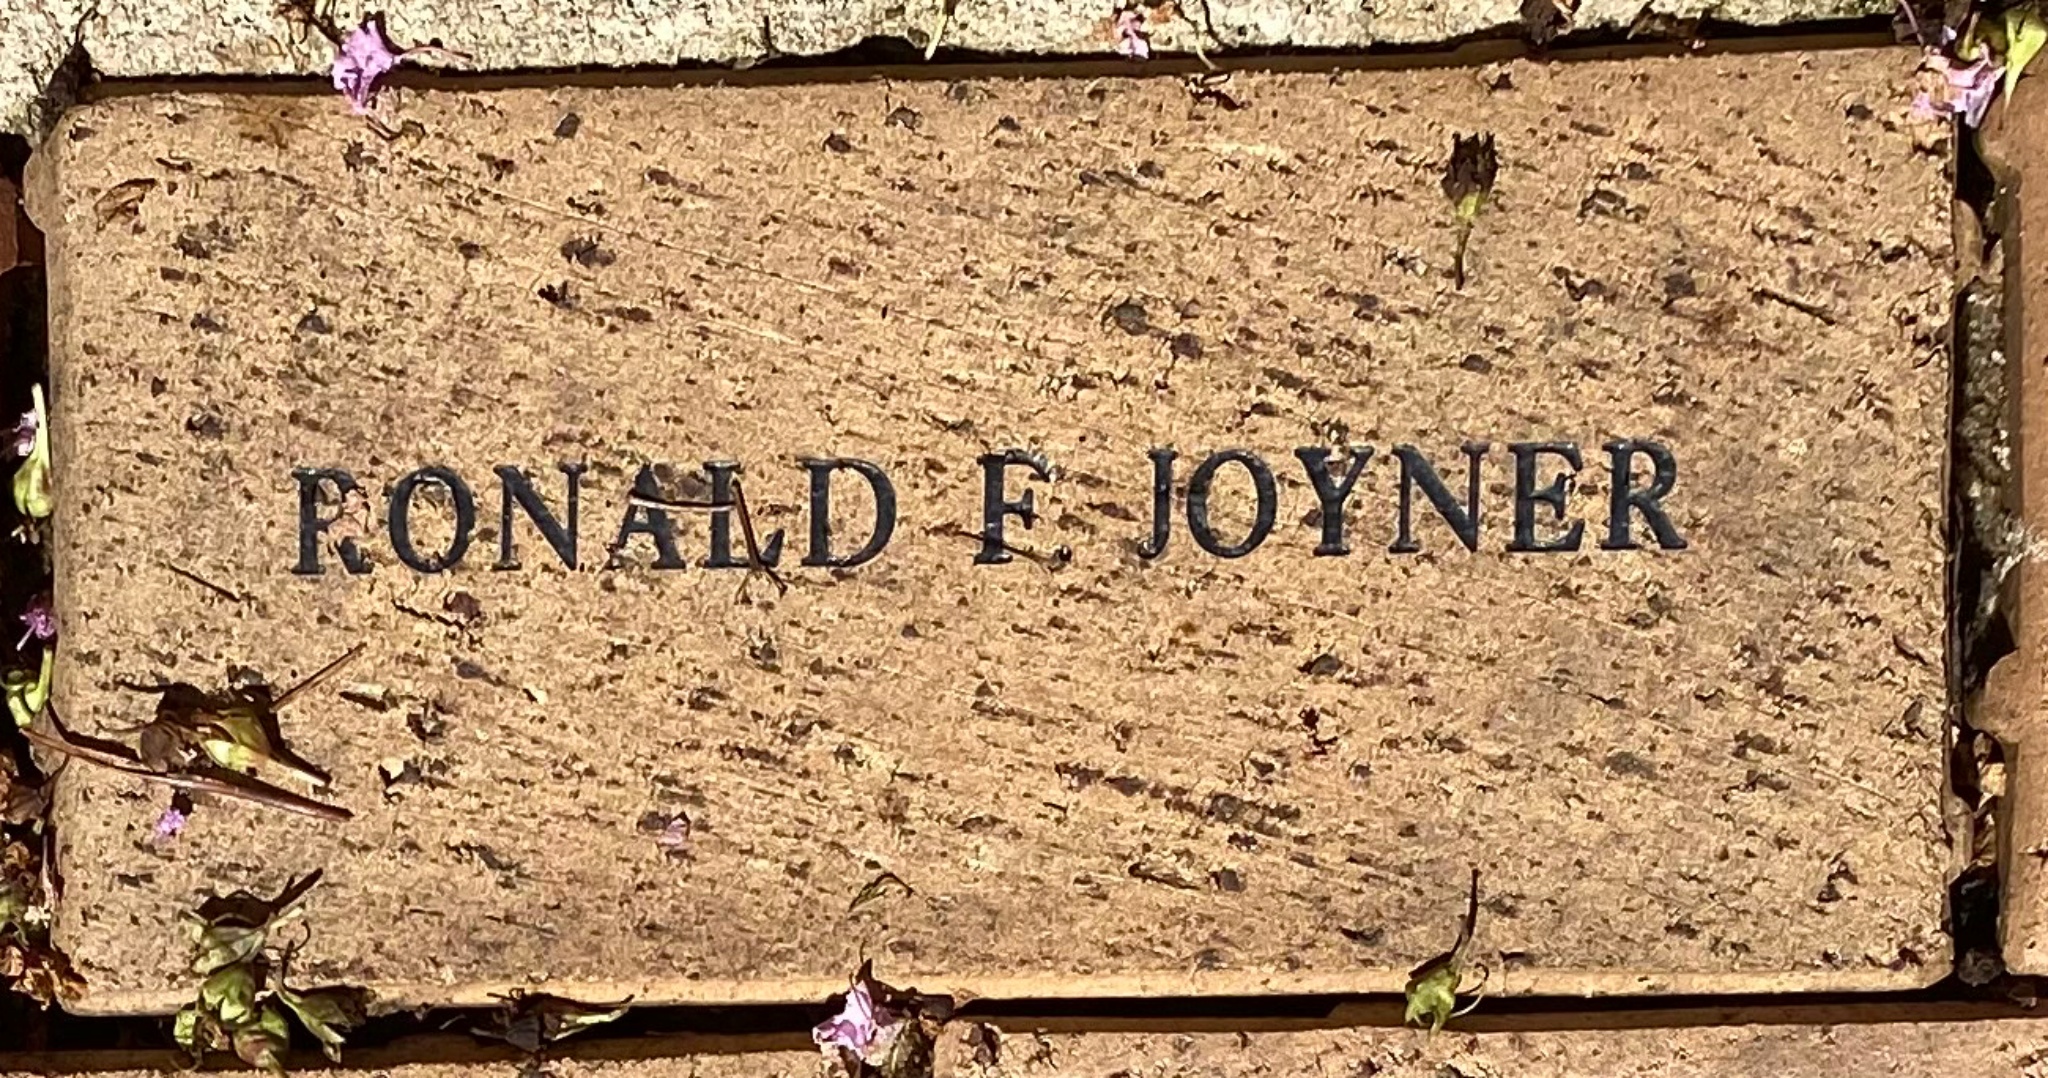 RONALD F. JOYNER